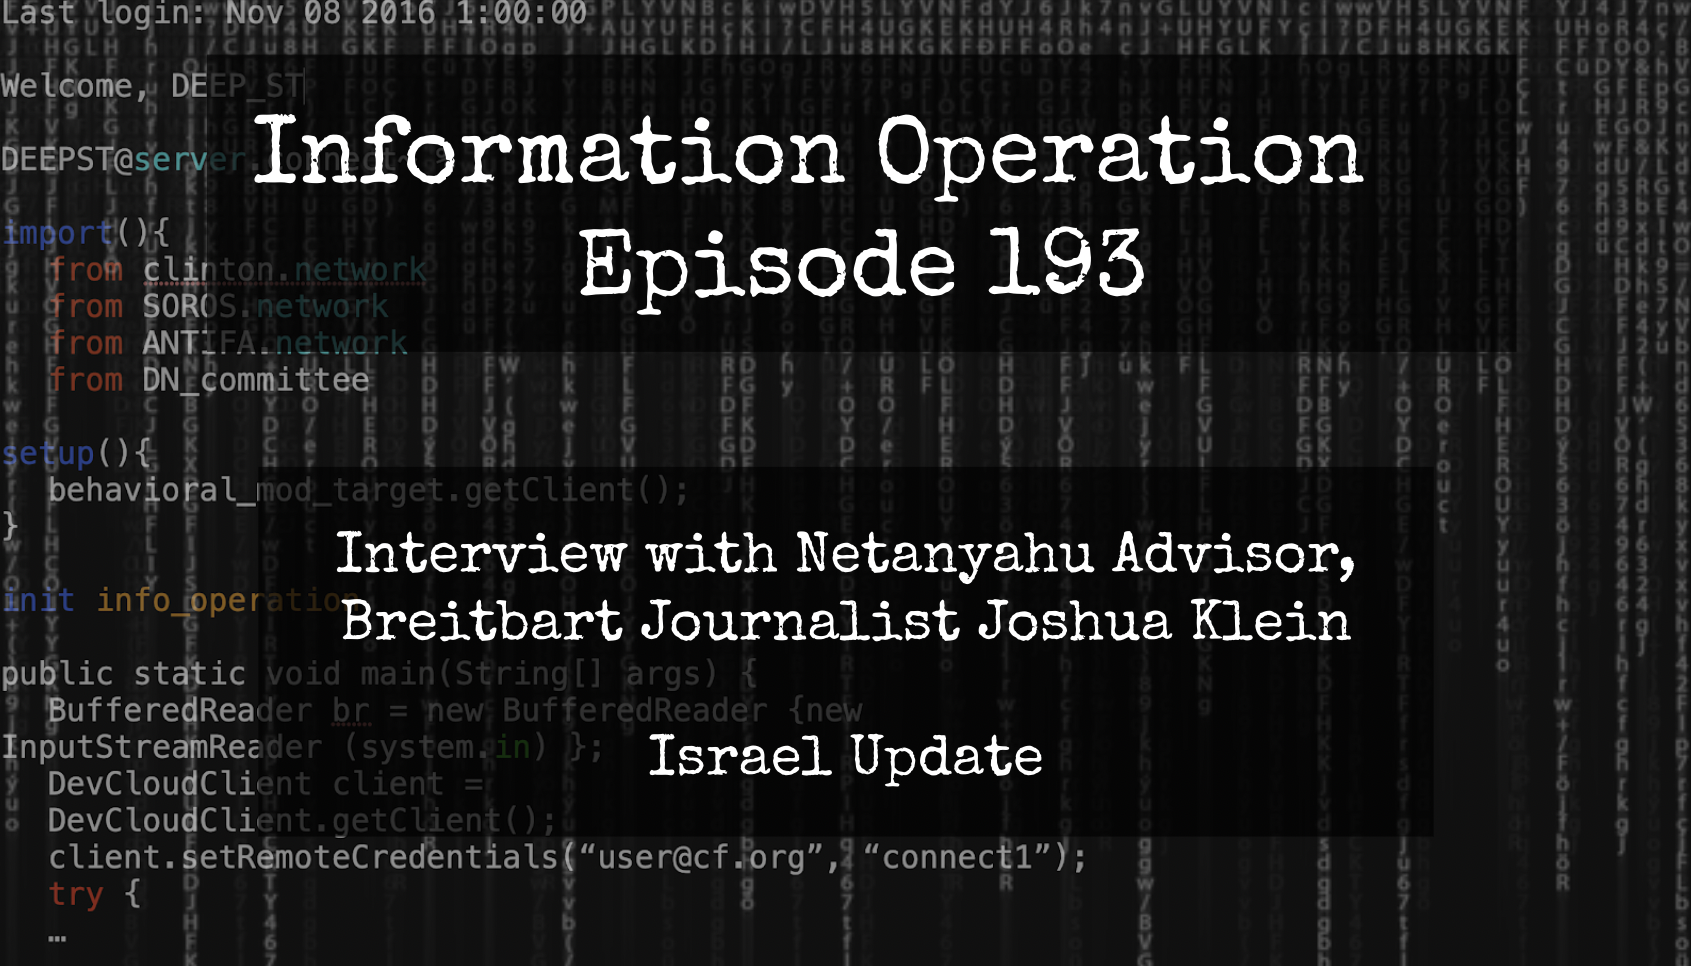 LIVE 9pm EST: Information Operation with Josh Klein - Israel Update